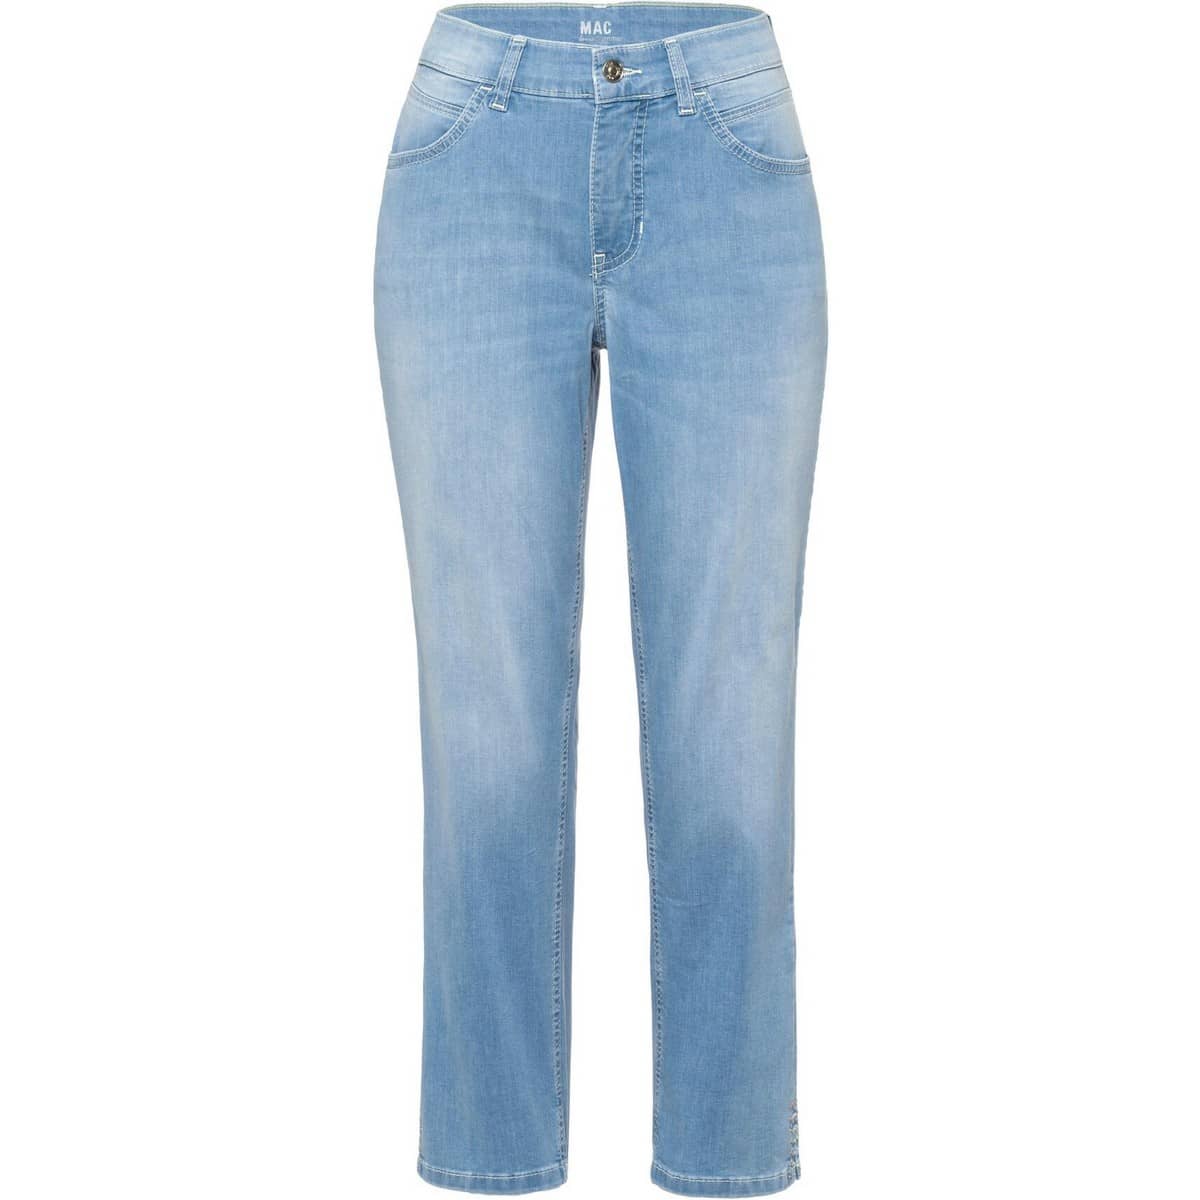 teer bedrijf Serena MAC • lichtblauwe jeans Melanie Summer Power • shop BollyWolly